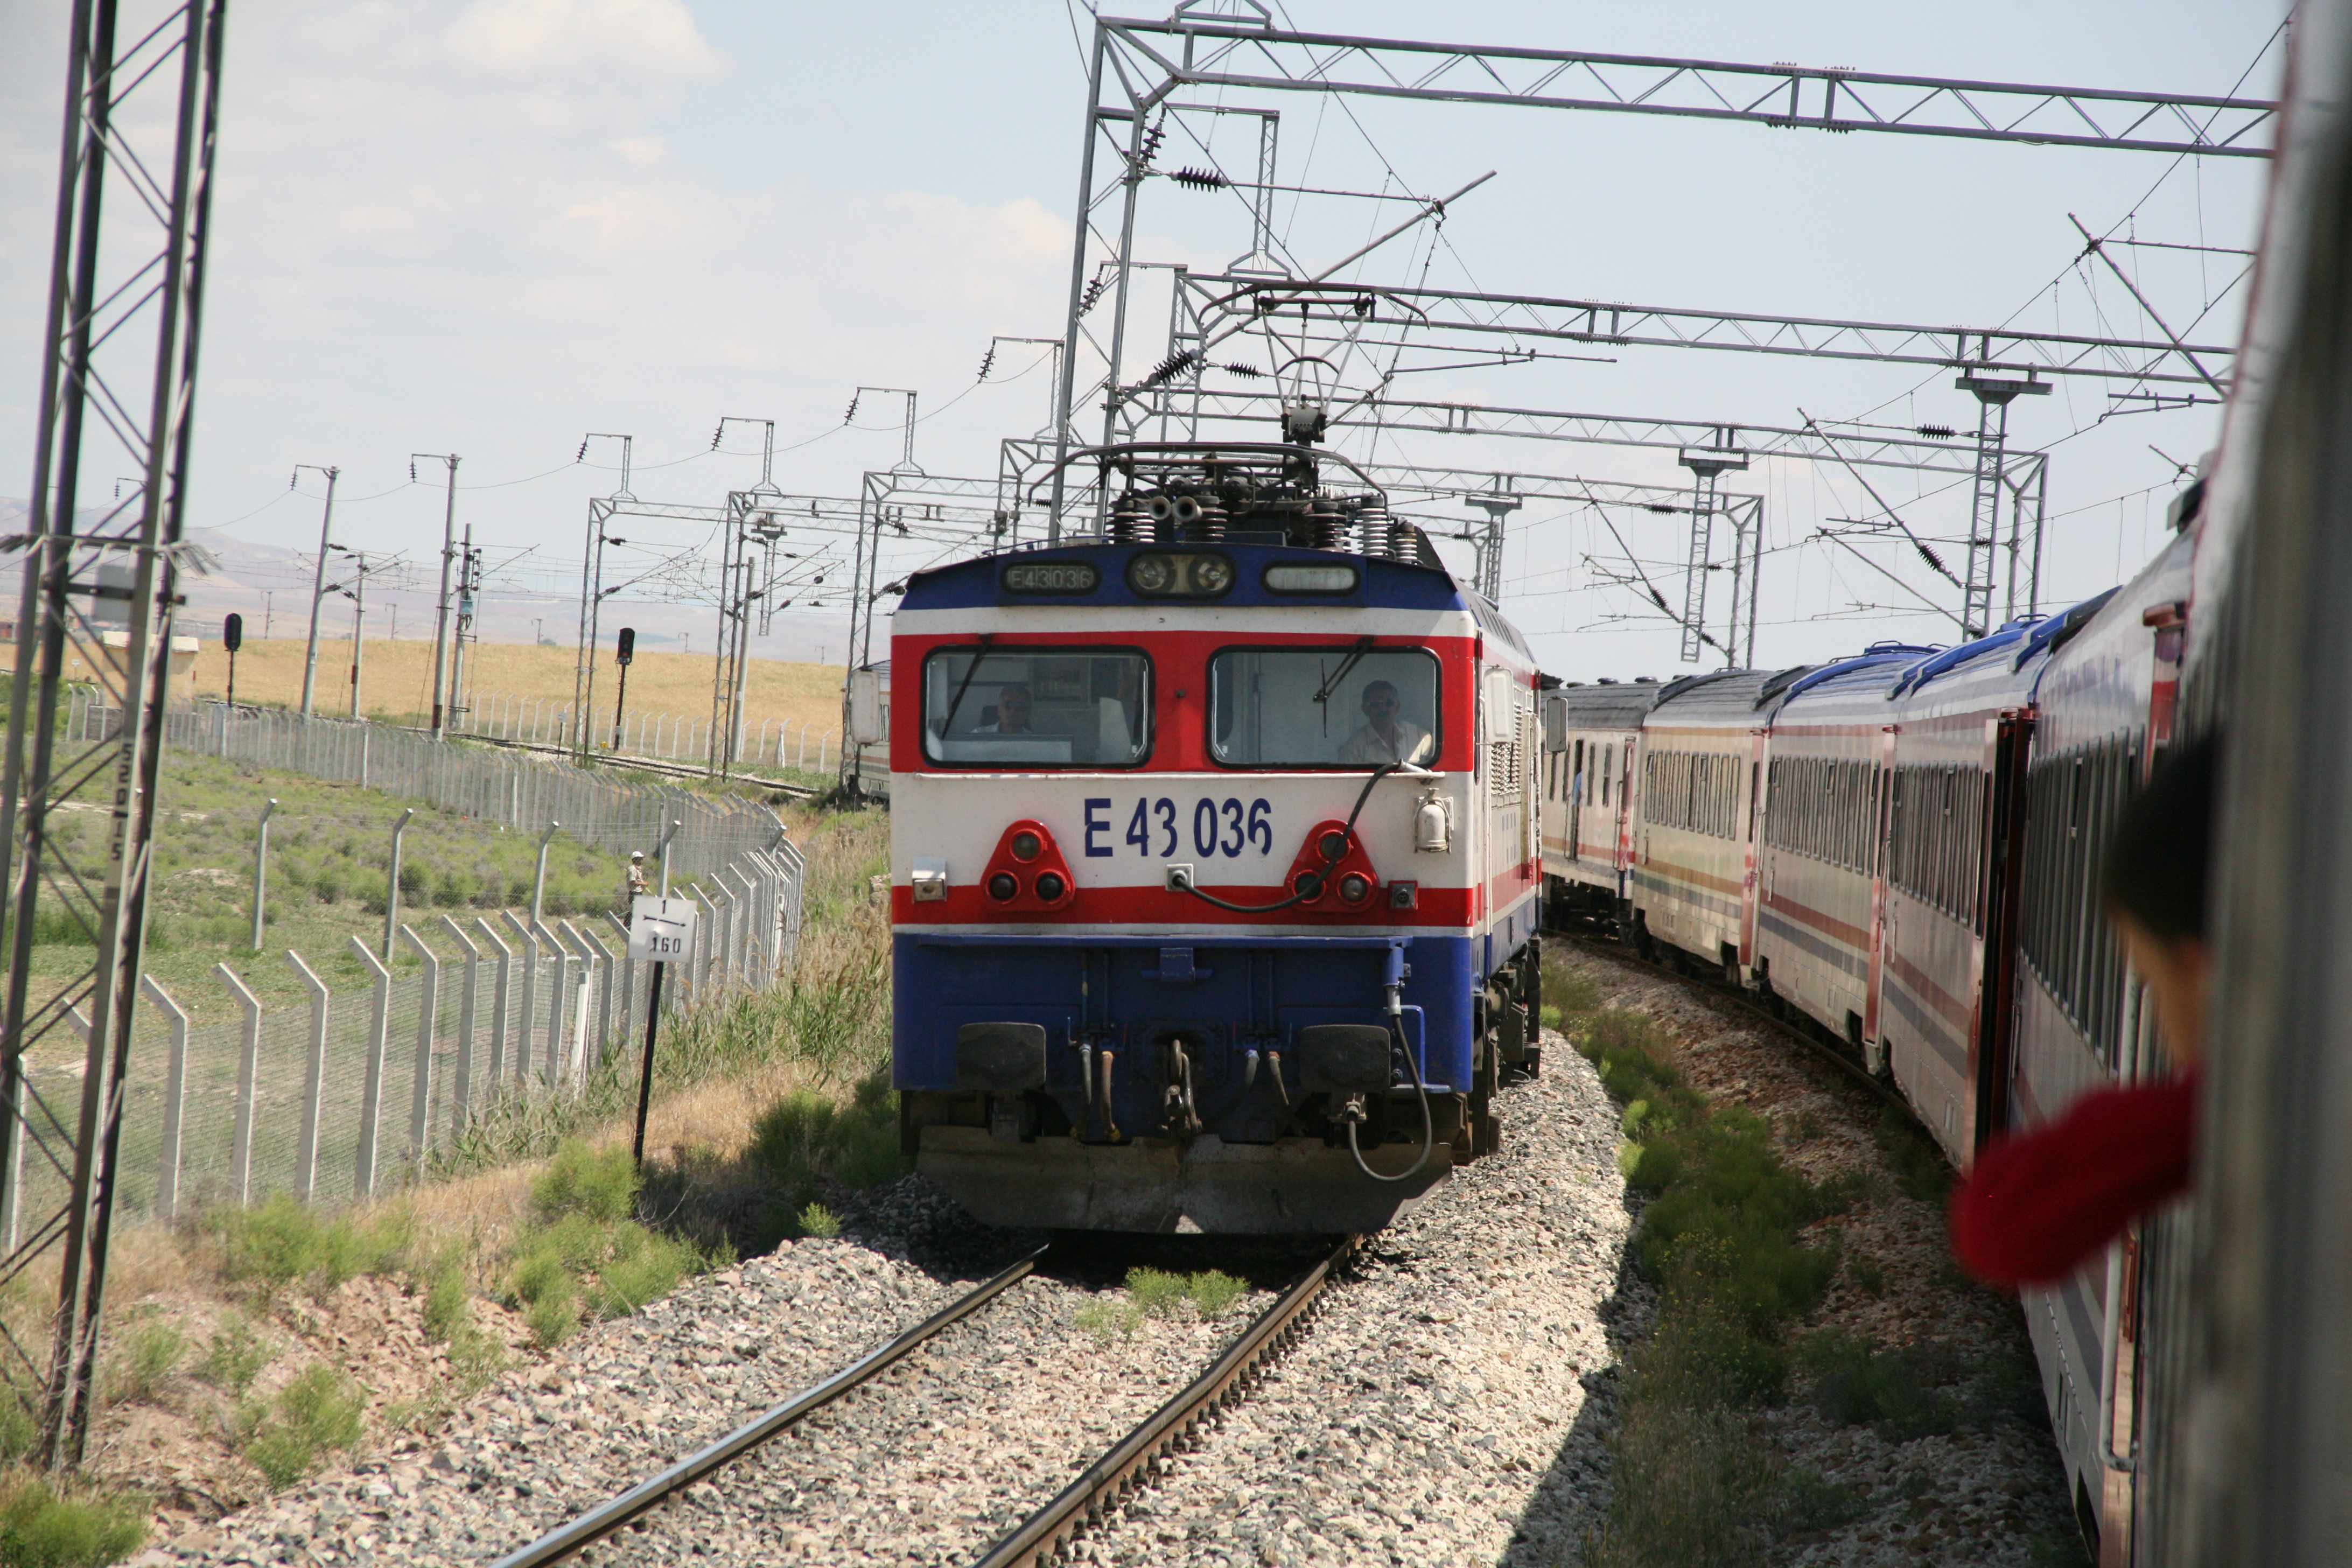 Double-track railway - Wikipedia